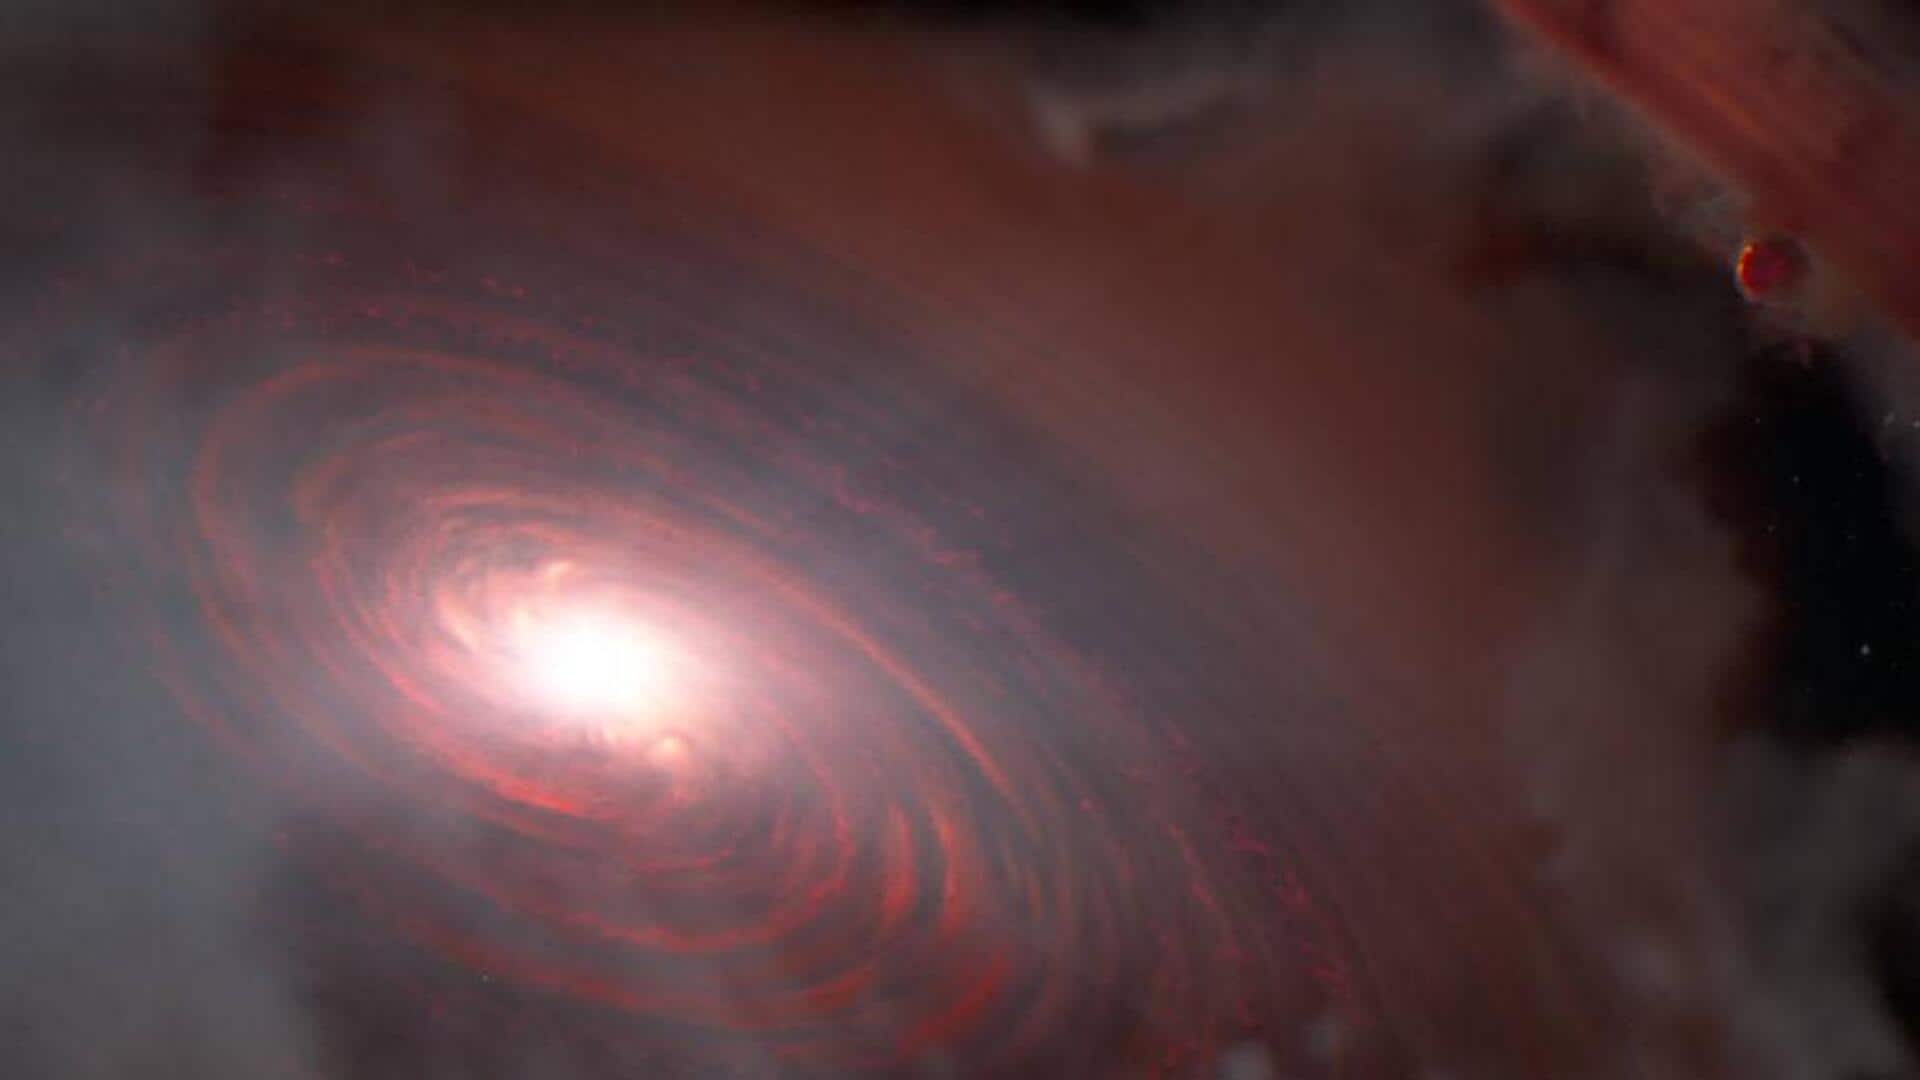 NASA's James Webb telescope detects water vapor in planet-forming region